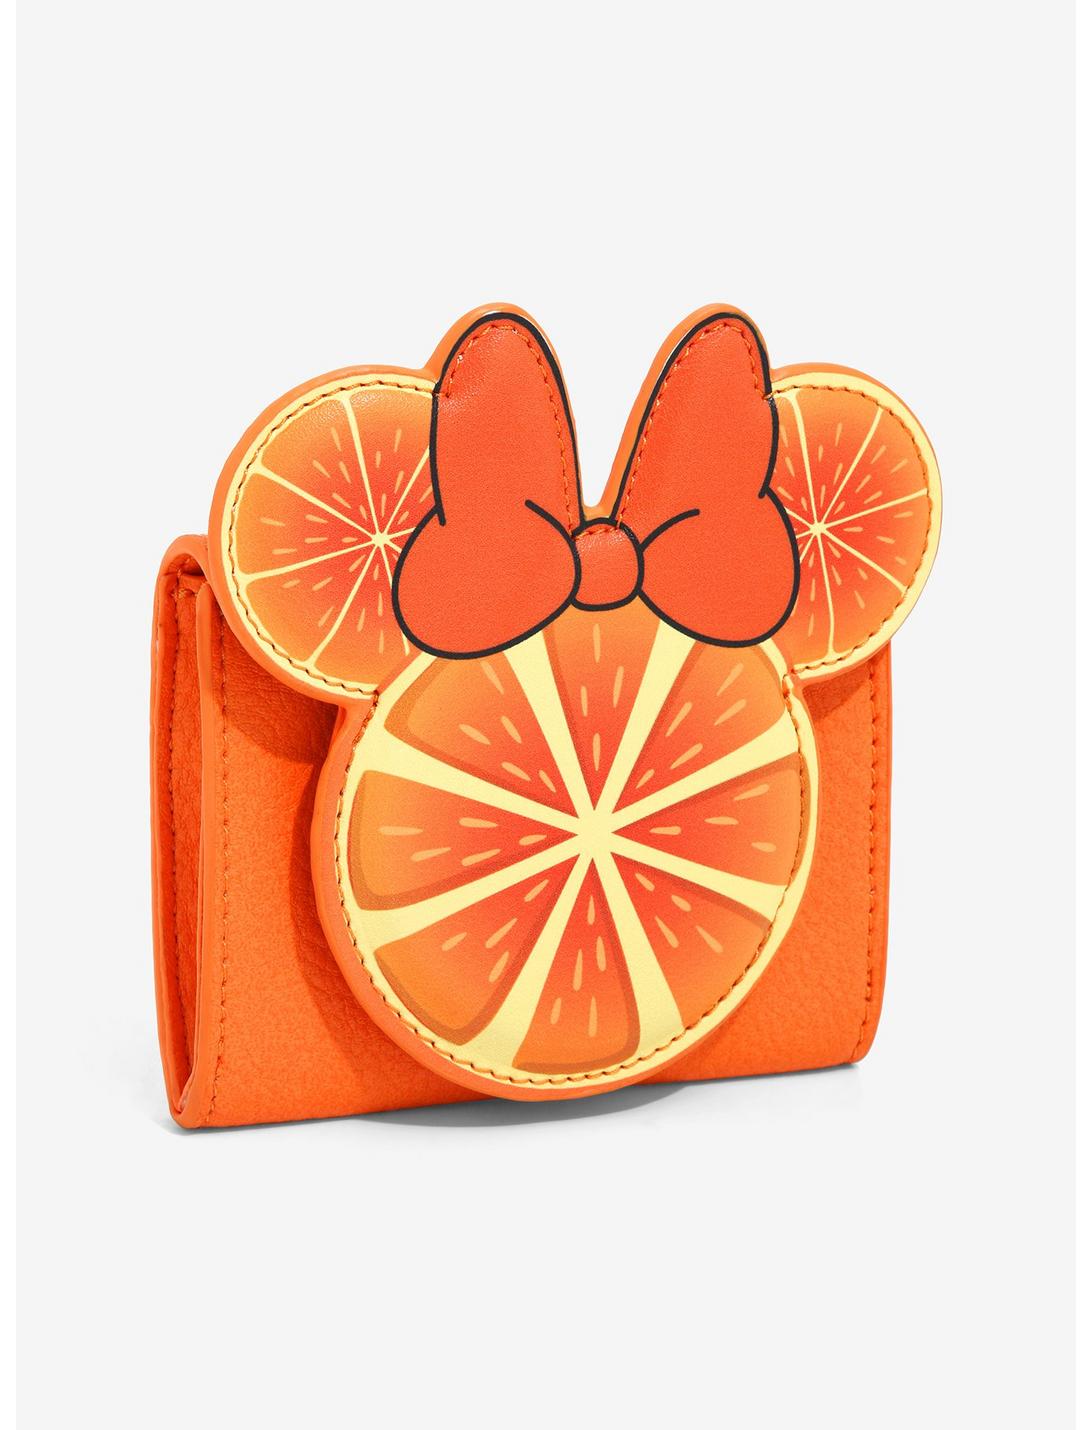 Our Universe Disney Minnie Mouse Citrus Cardholder  - BoxLunch Exclusive